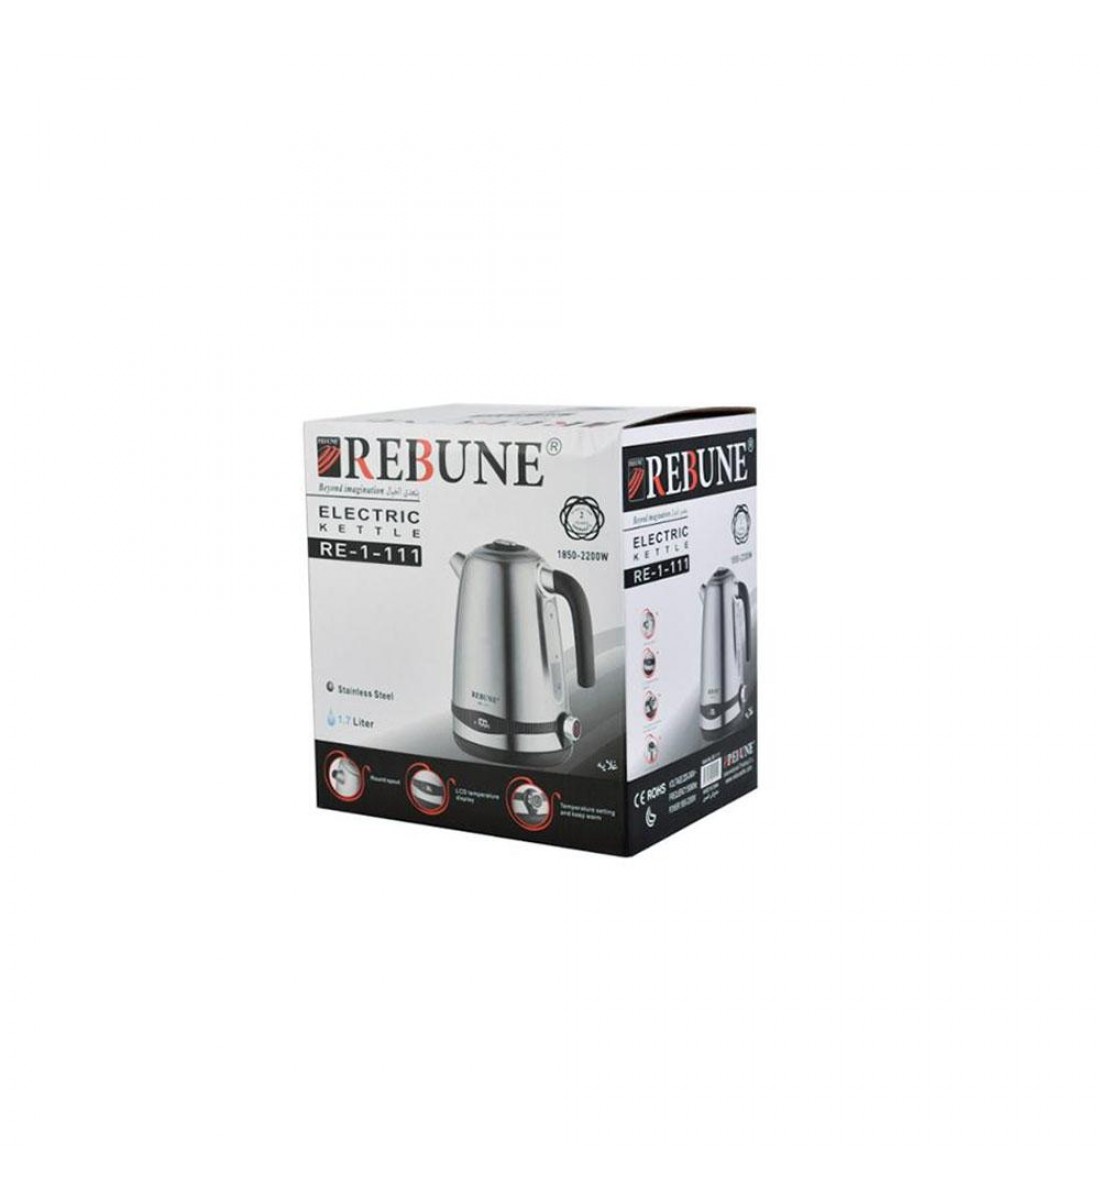 Rebune Electric Kettle 2200 Watt 220 Volt 1.7 Liter